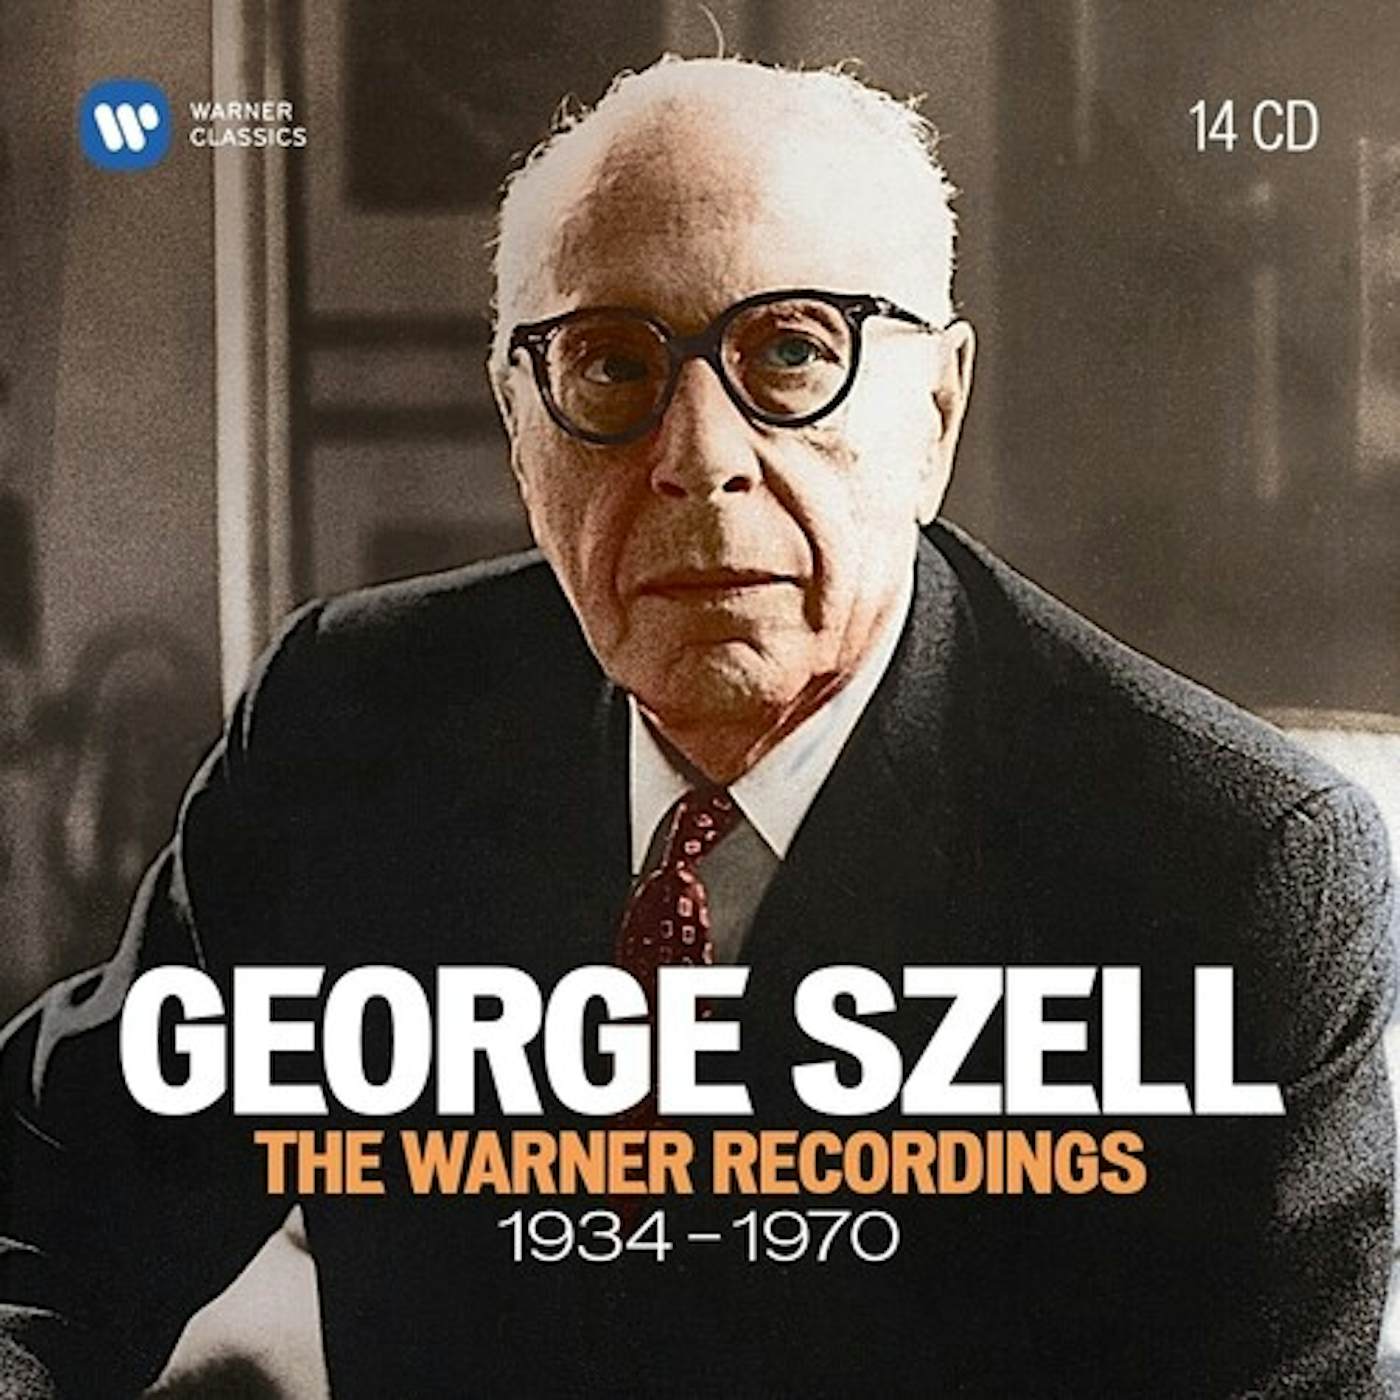 George Szell WARNER RECORDINGS 1934-1970 CD